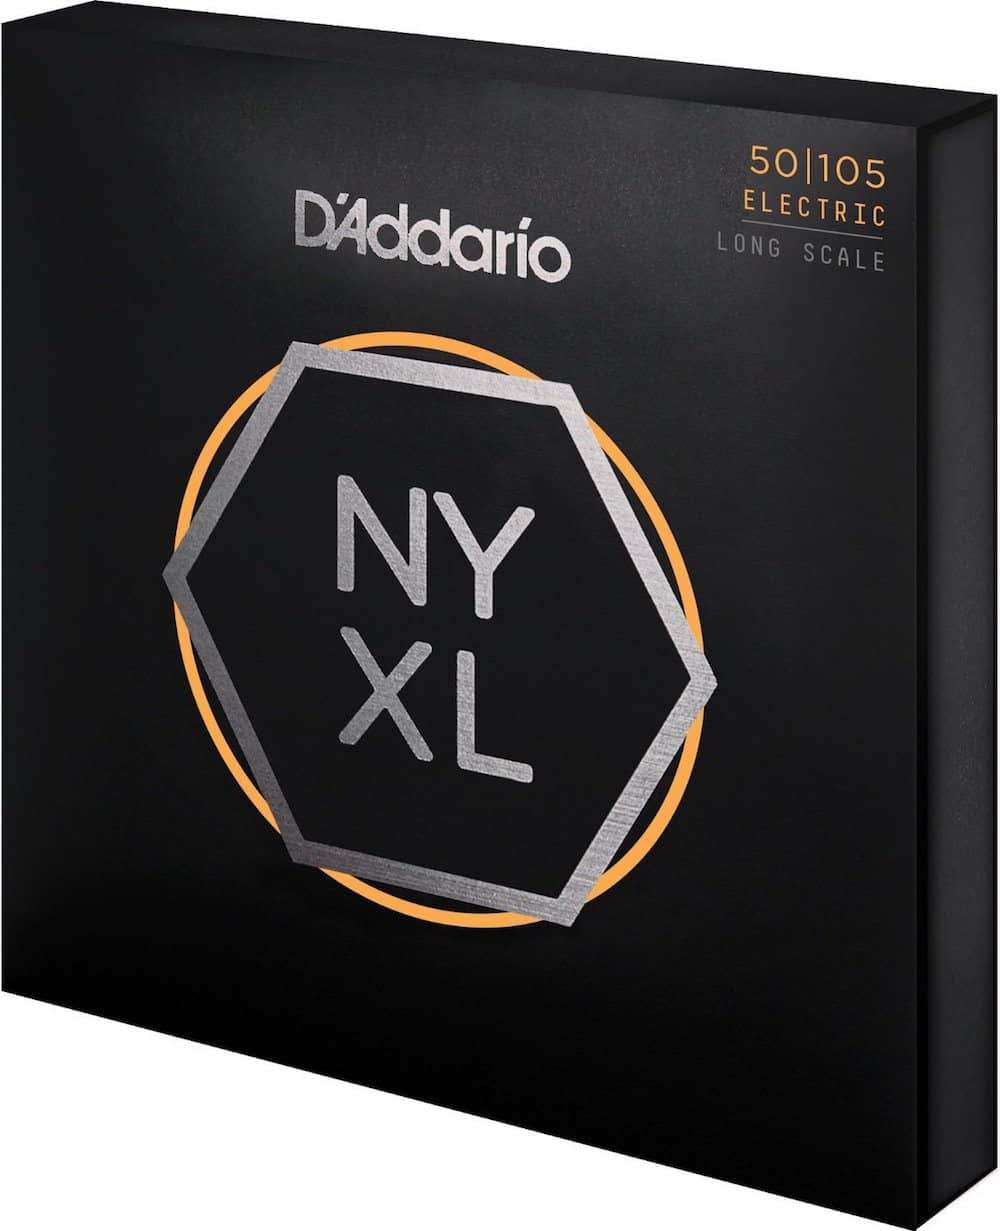 Review - D’Addario NYXL Bass Strings